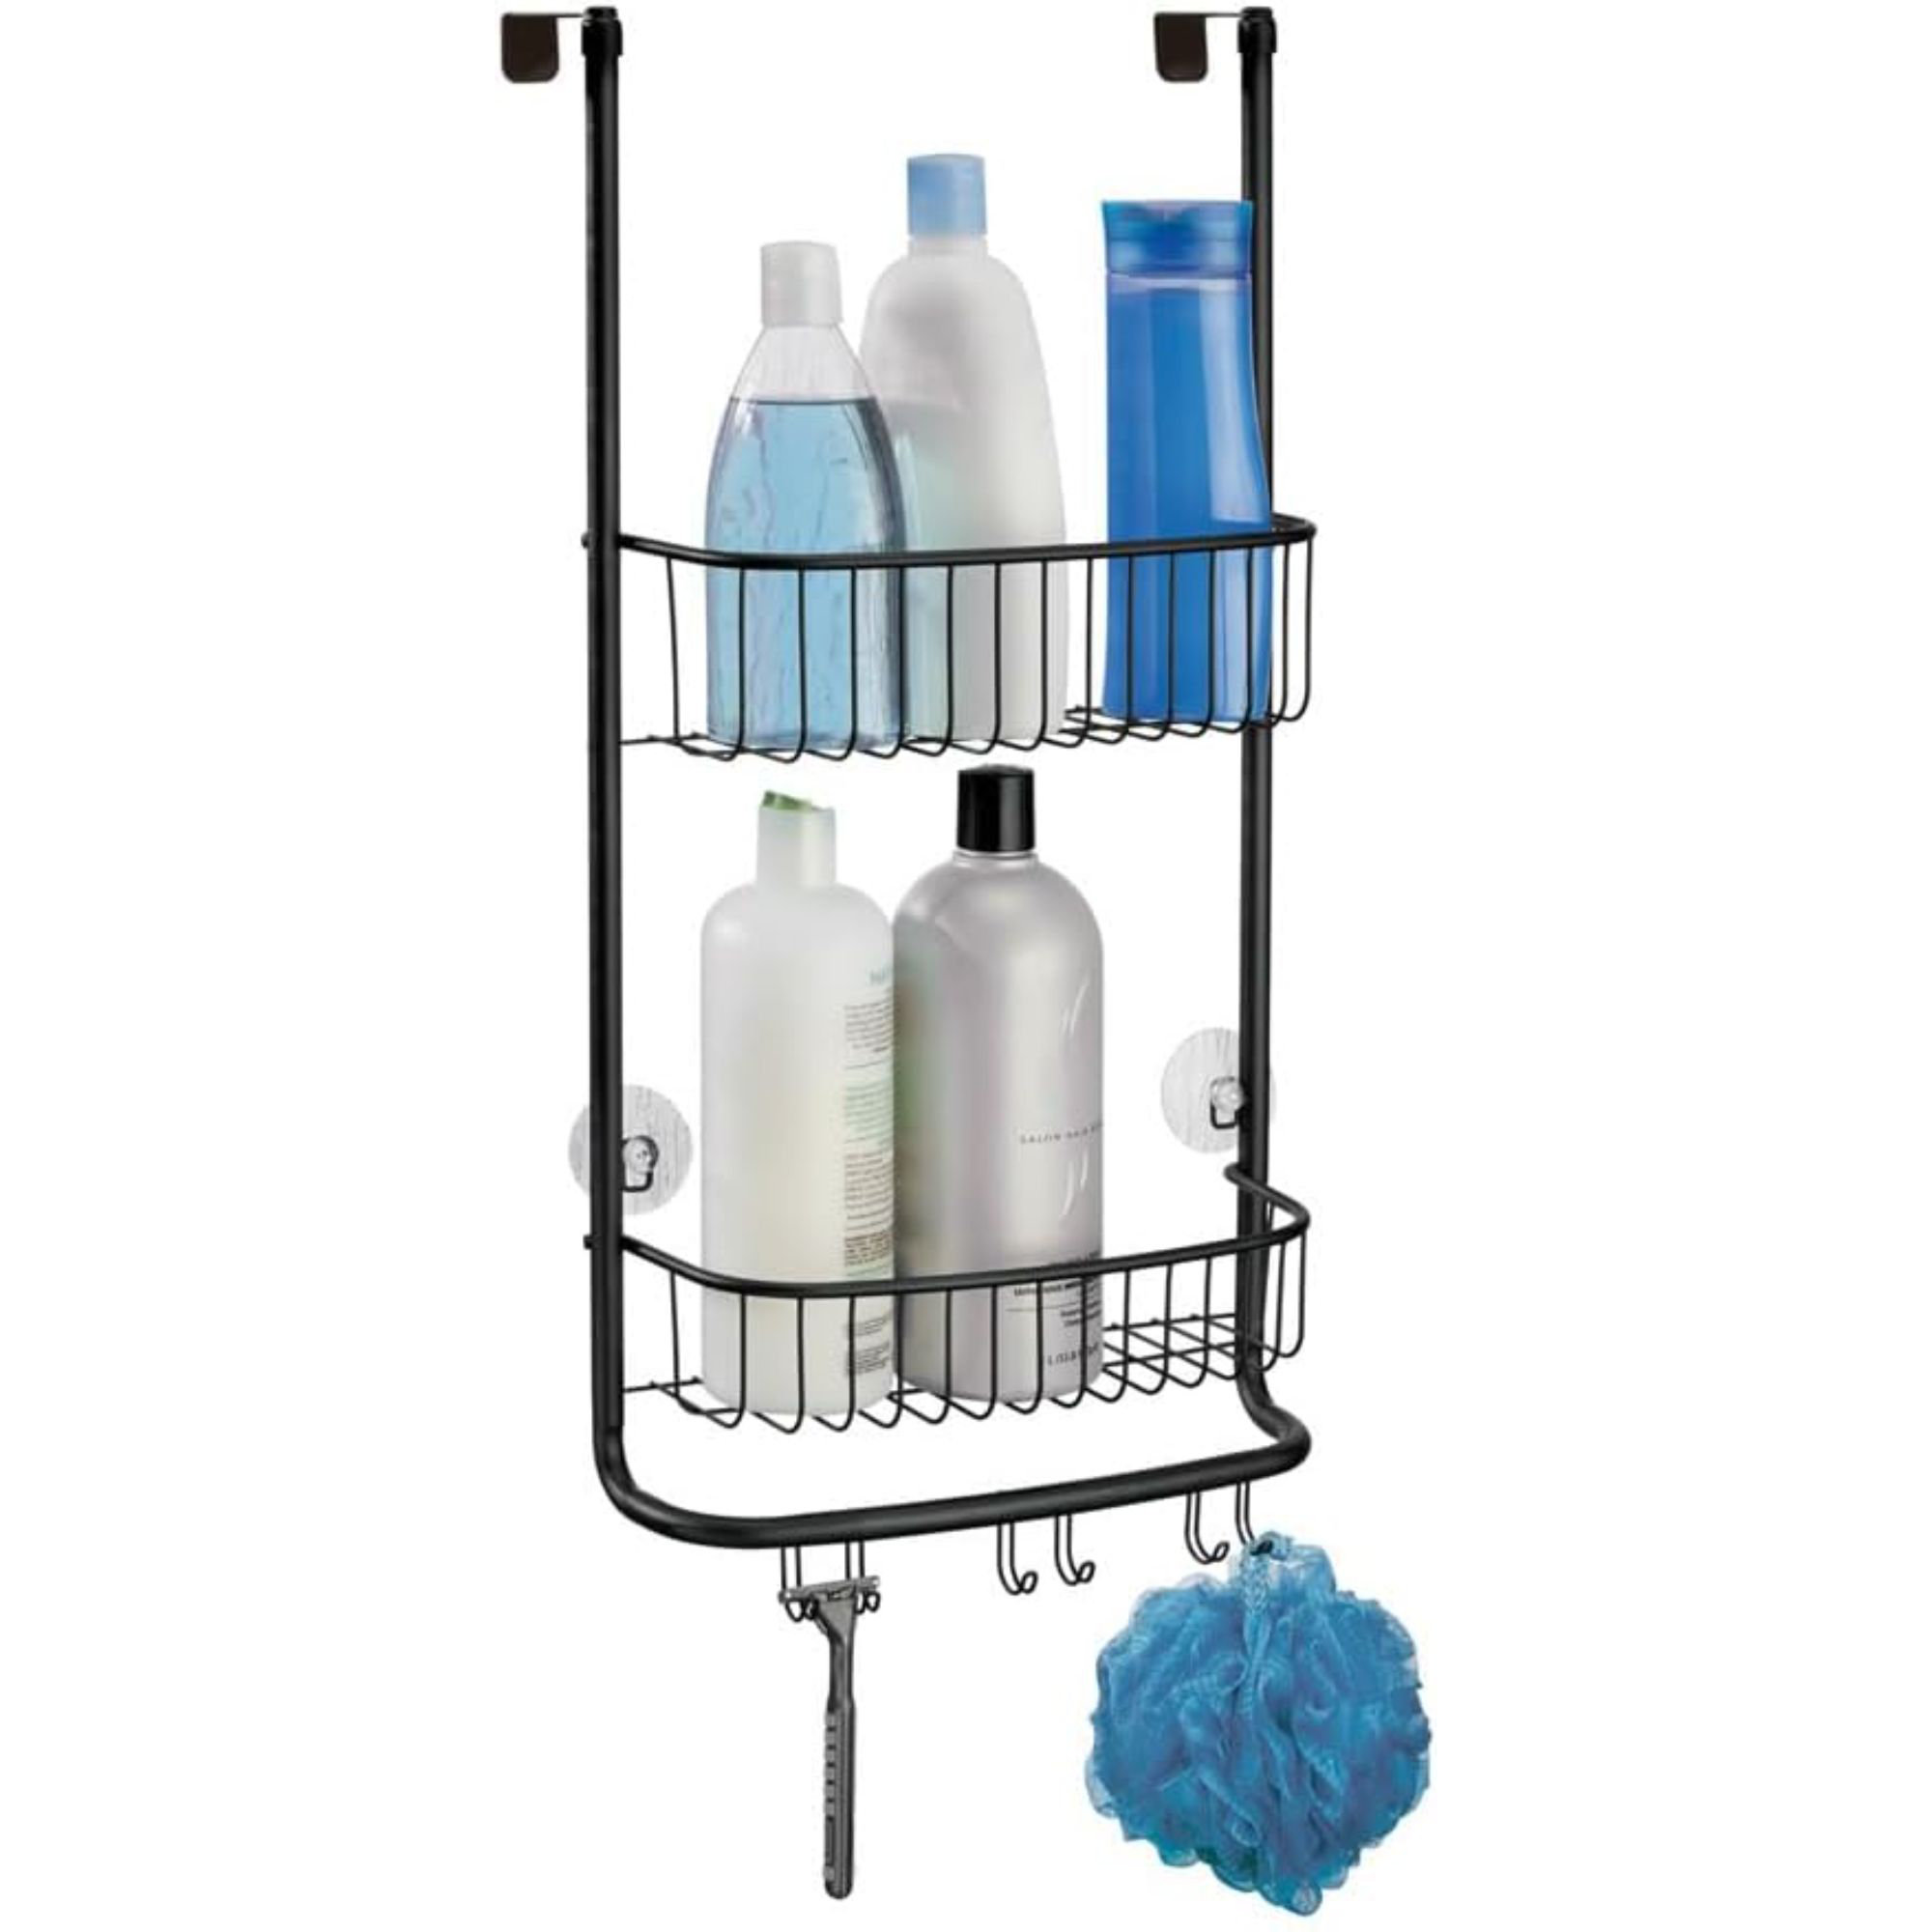 Over The Door Shower Caddy, Hanging Organizer Shelf Rustproof, Shower Basket with Suction Cup Rebrilliant